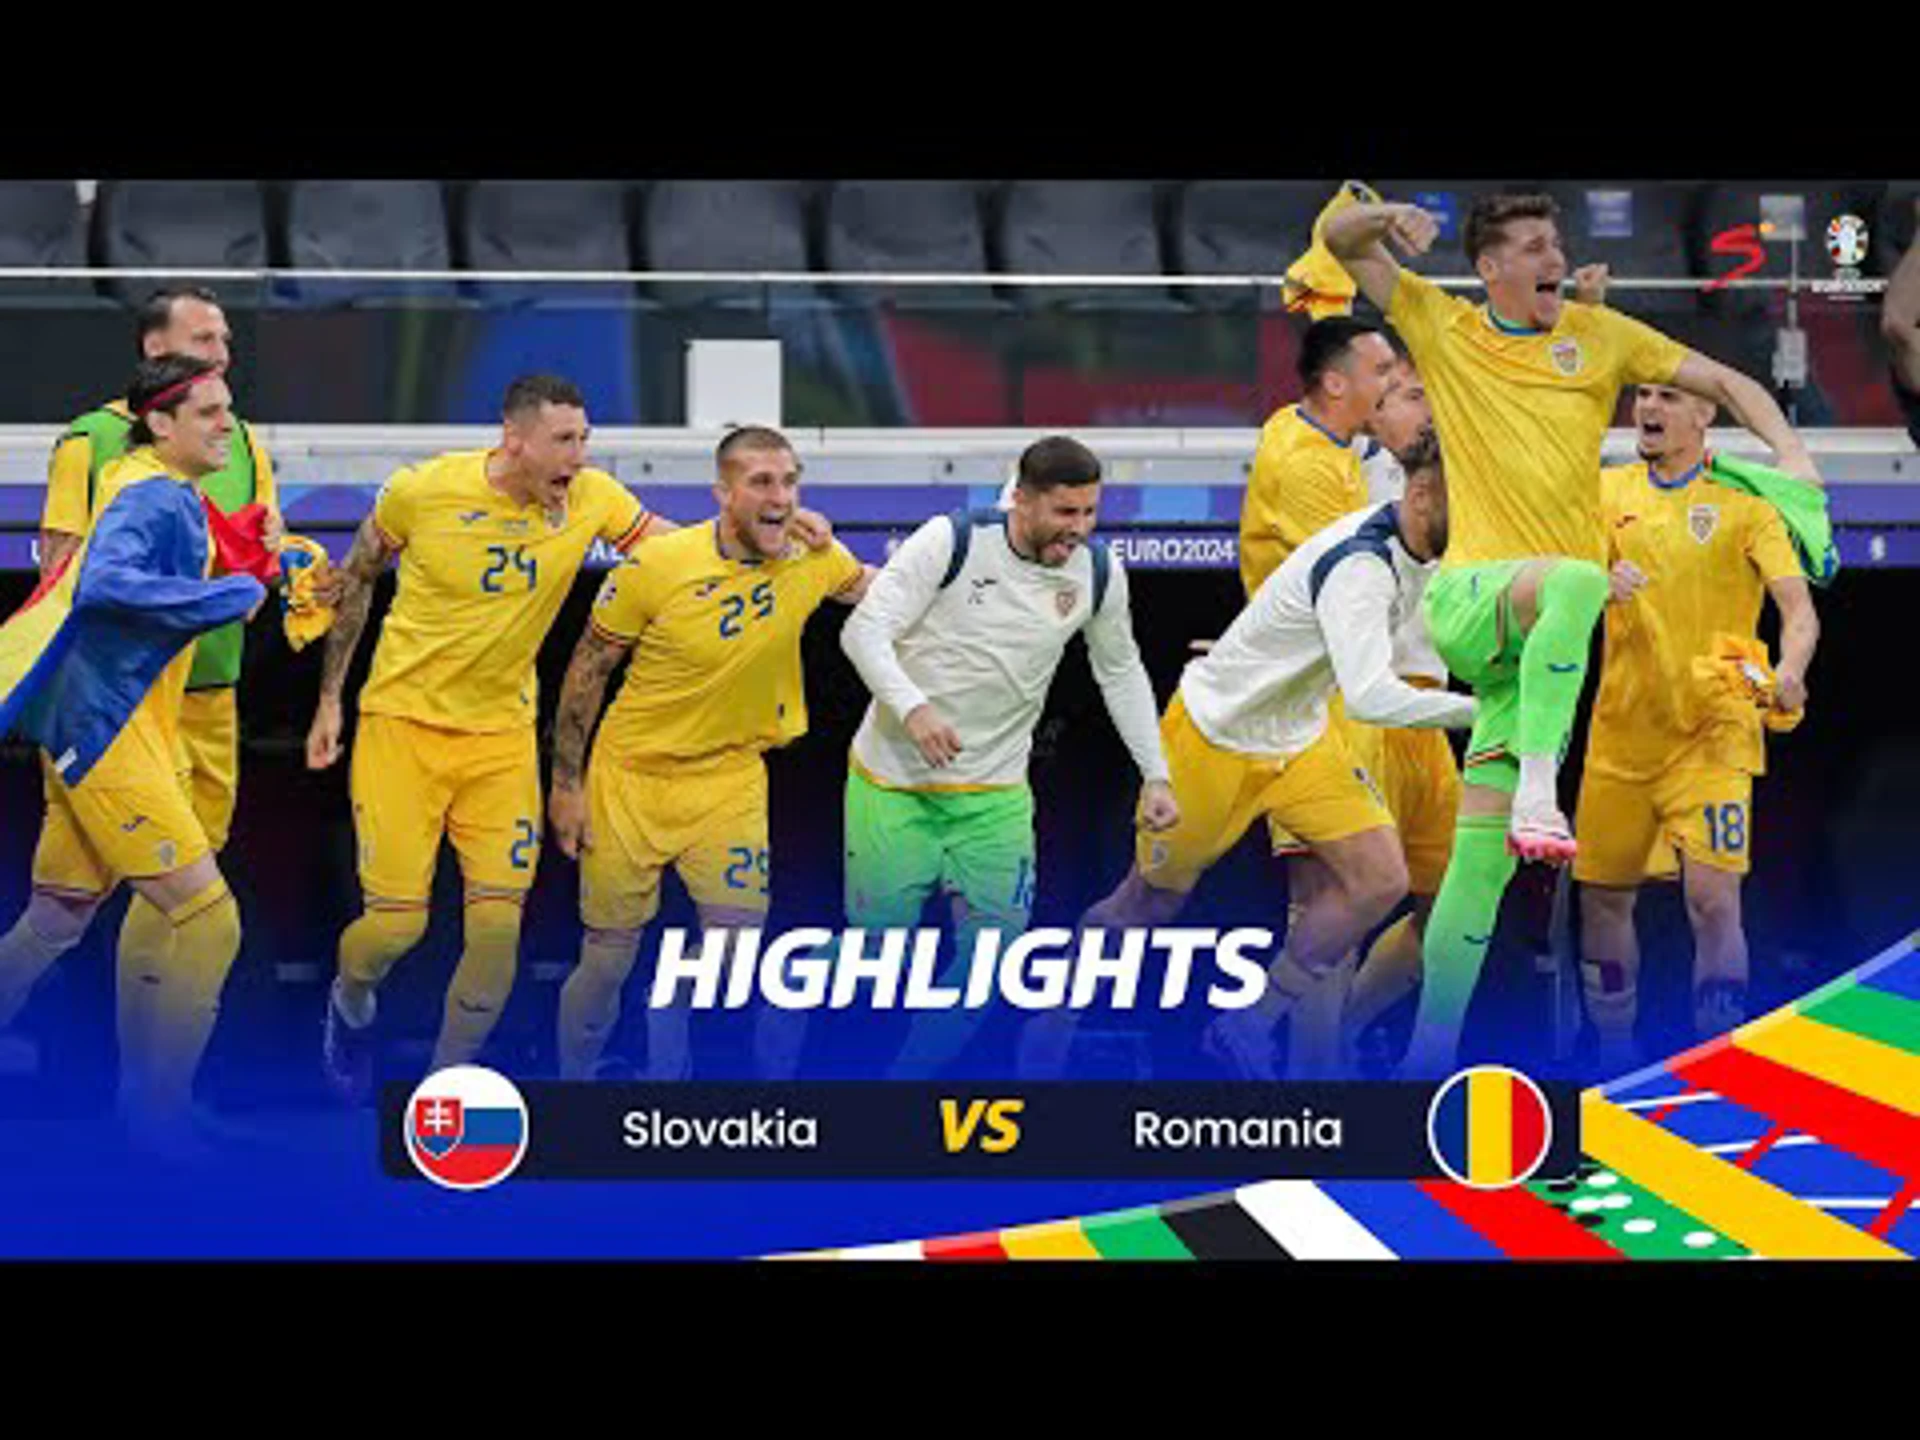 Slovakia vs Romania - Figure 1